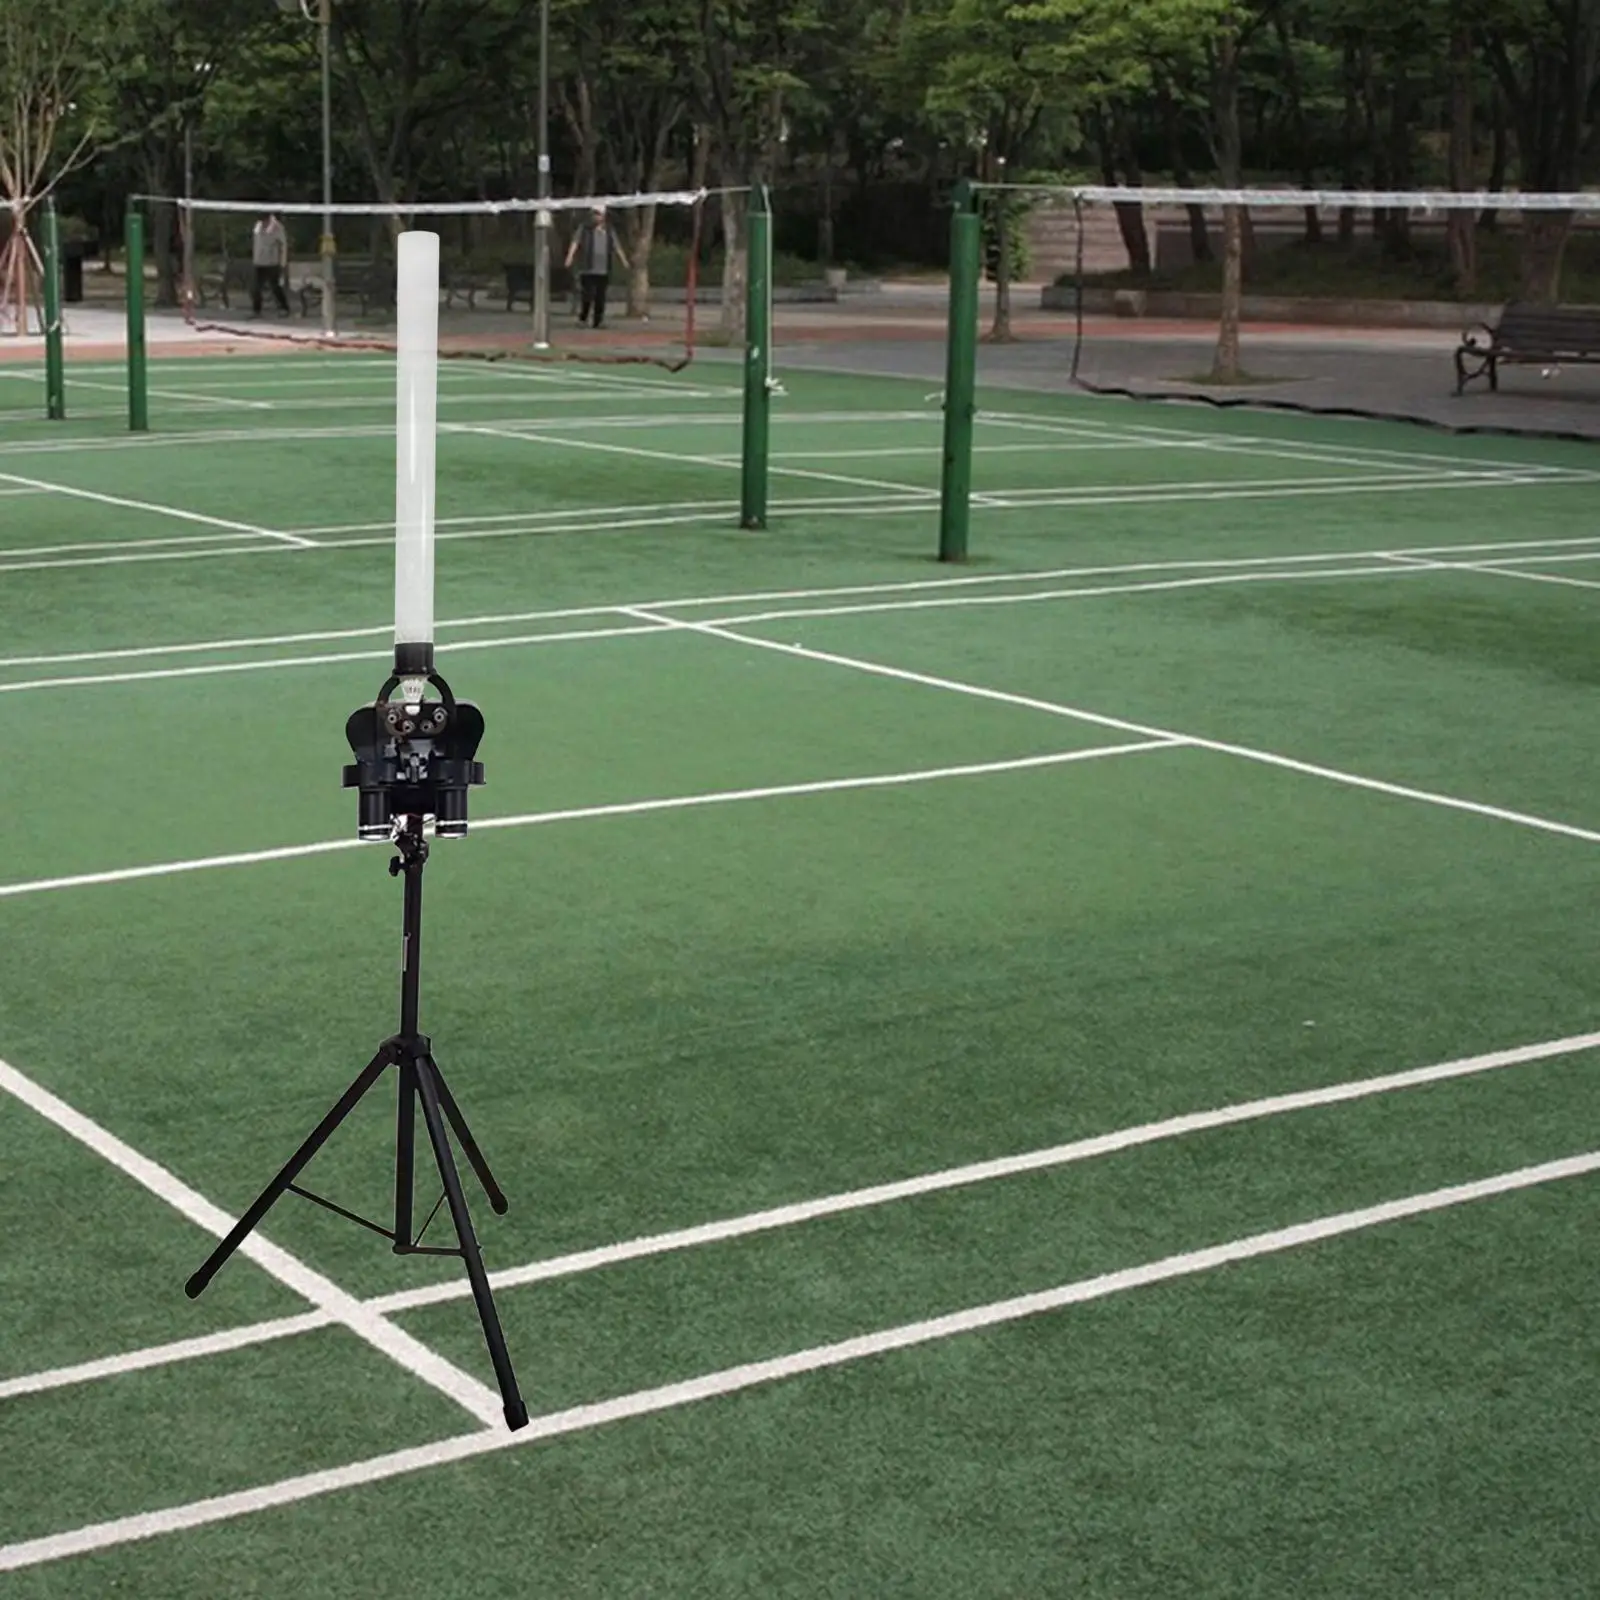 Automatic Badminton Serve Machine Automatic Badminton Launcher Adjustable Angle Adjustment Sport Game for Kids Sports Toys